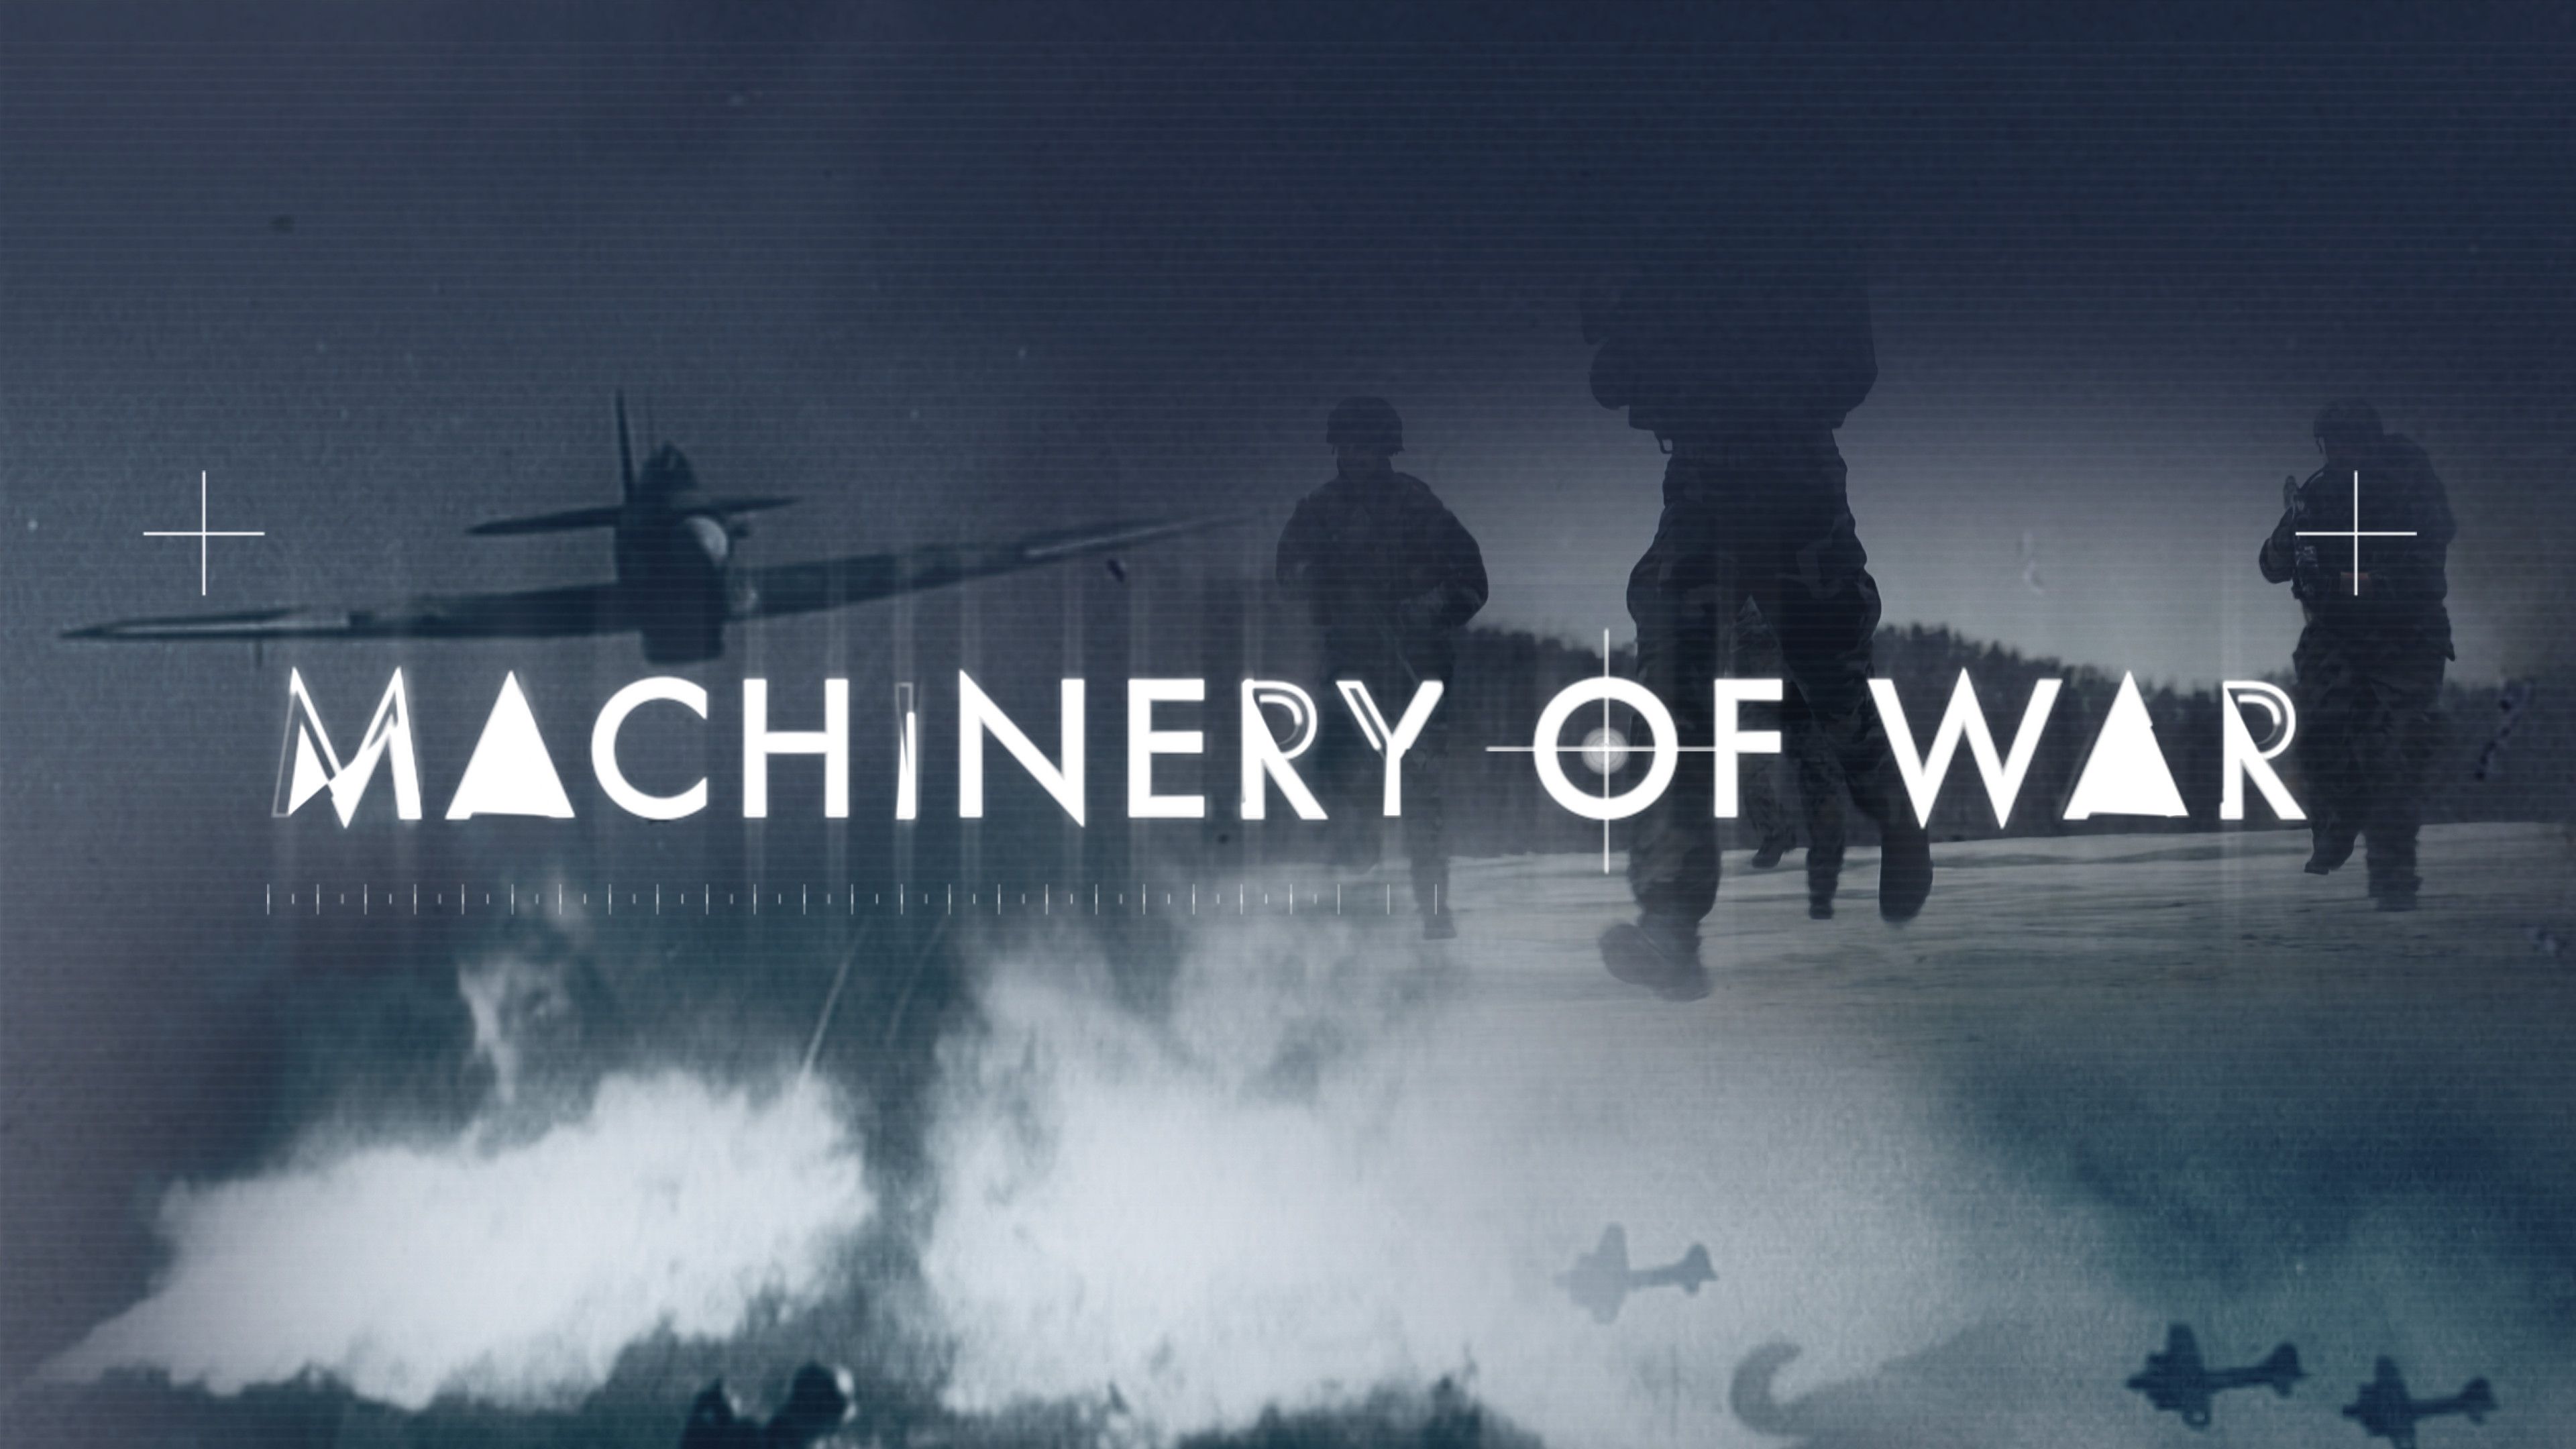 Machinery of War